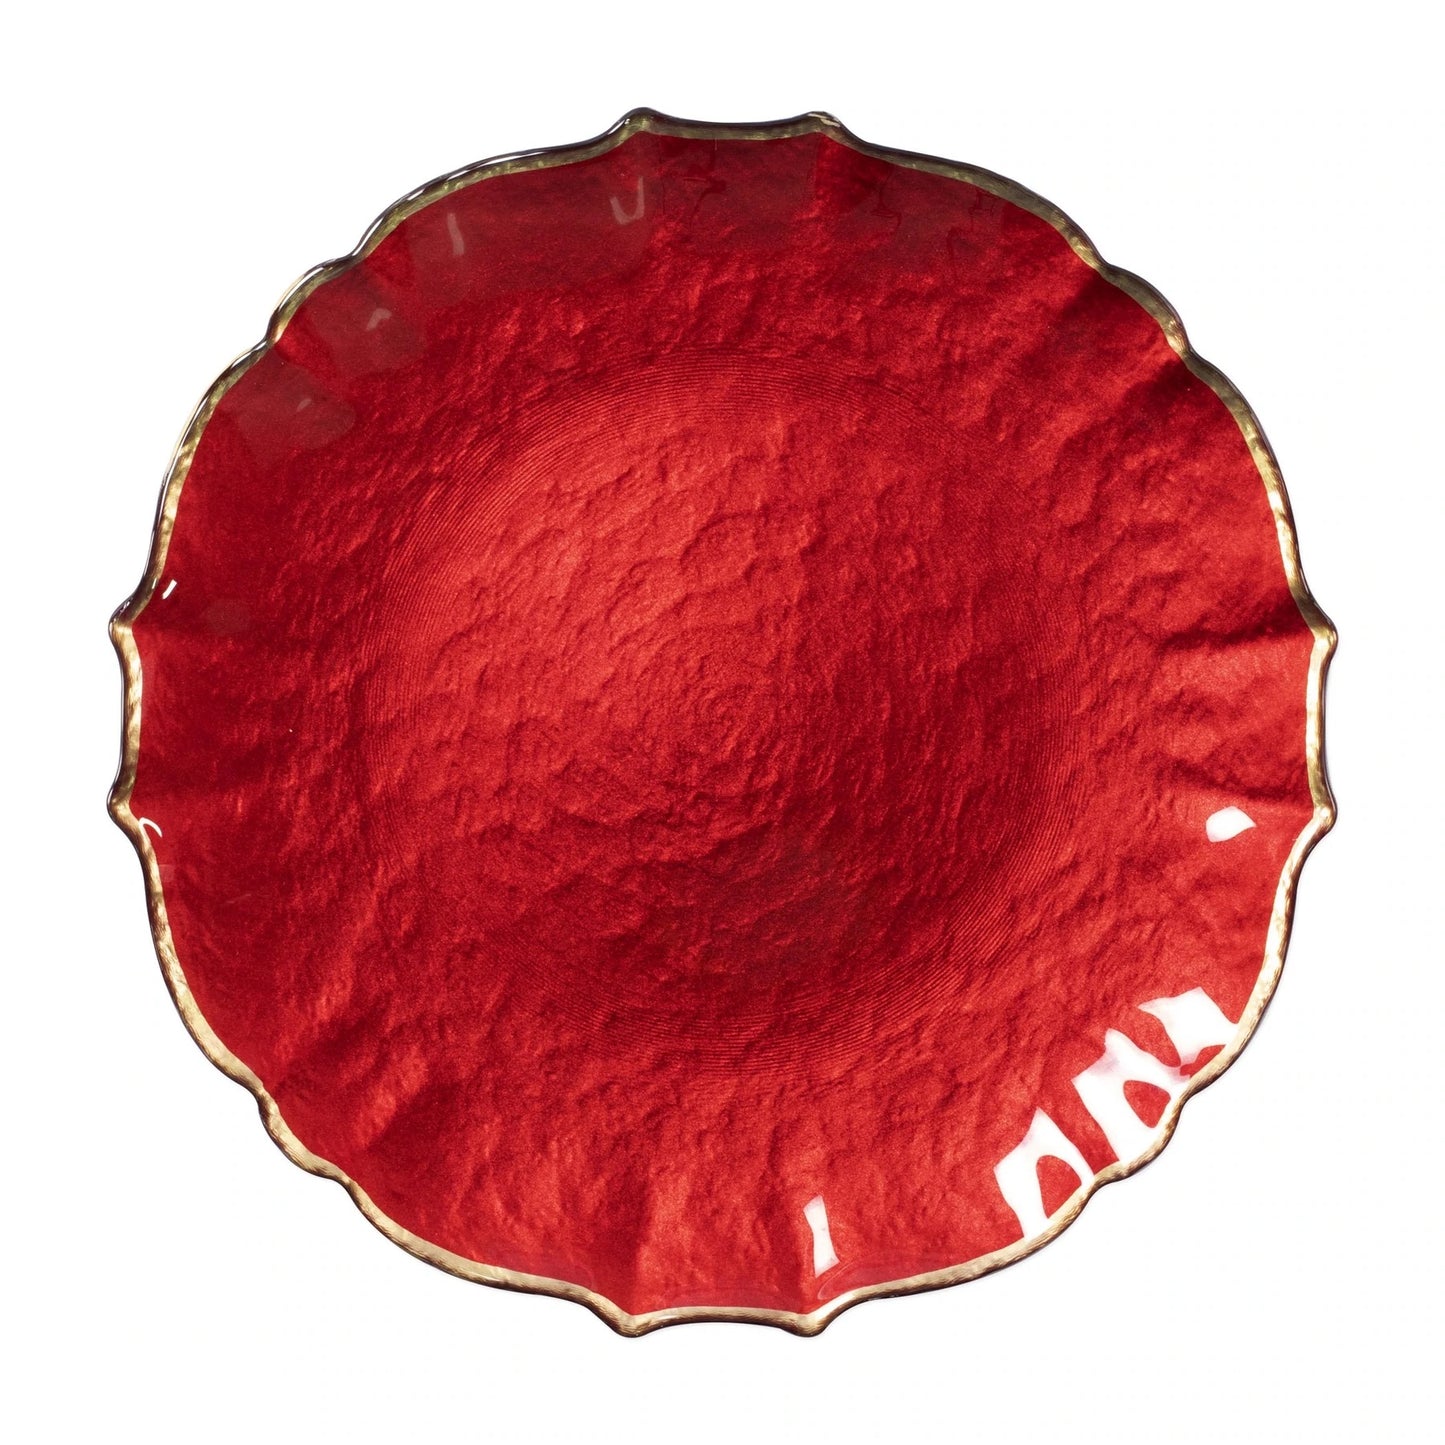 Vietri Viva by Vietri Baroque Glass Service Plate/Charger, Red